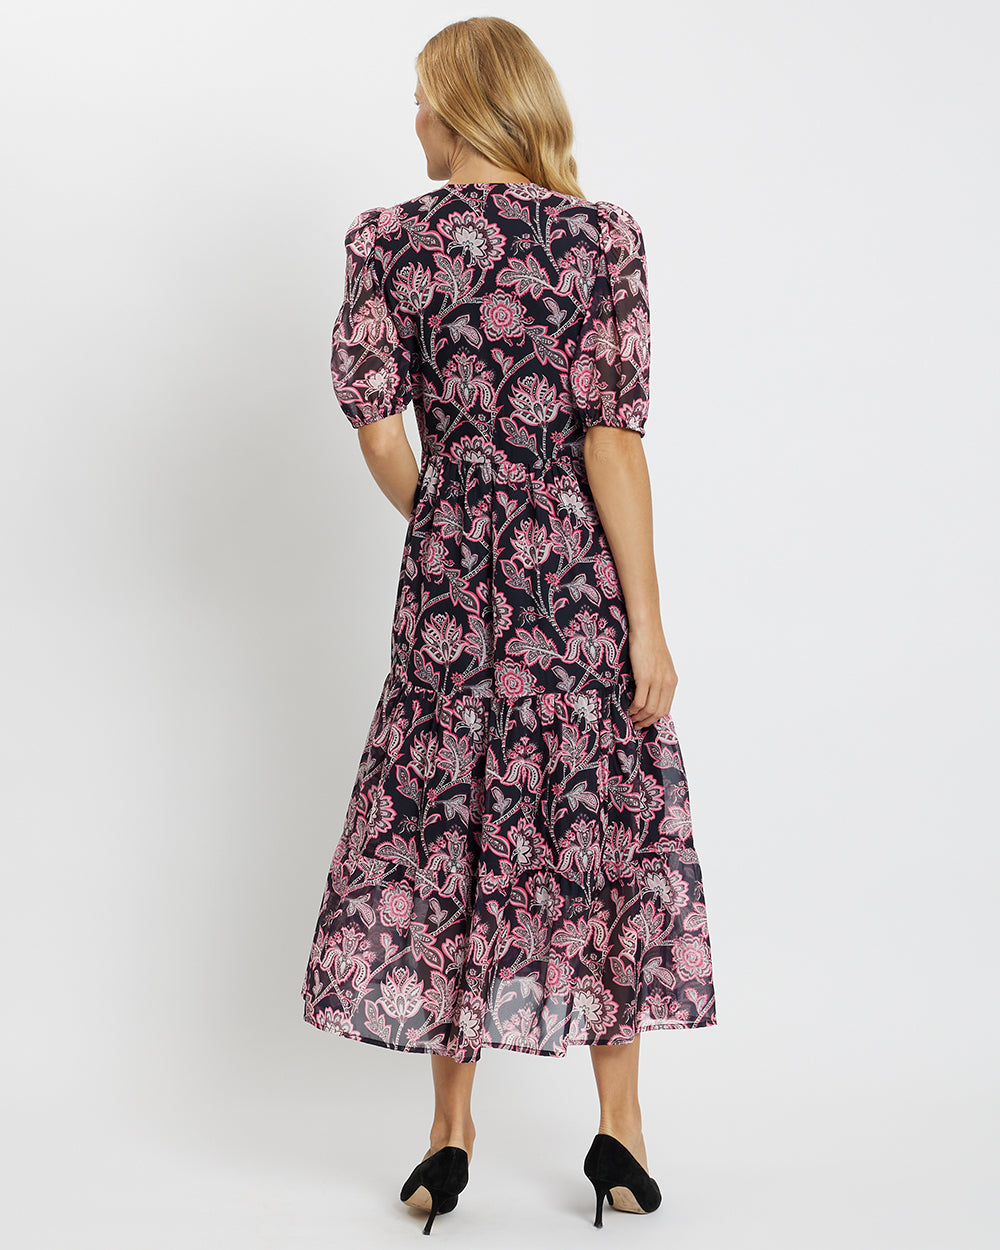 Jordana Chiffon Dress in Lalique Floral Black| Jude Connally